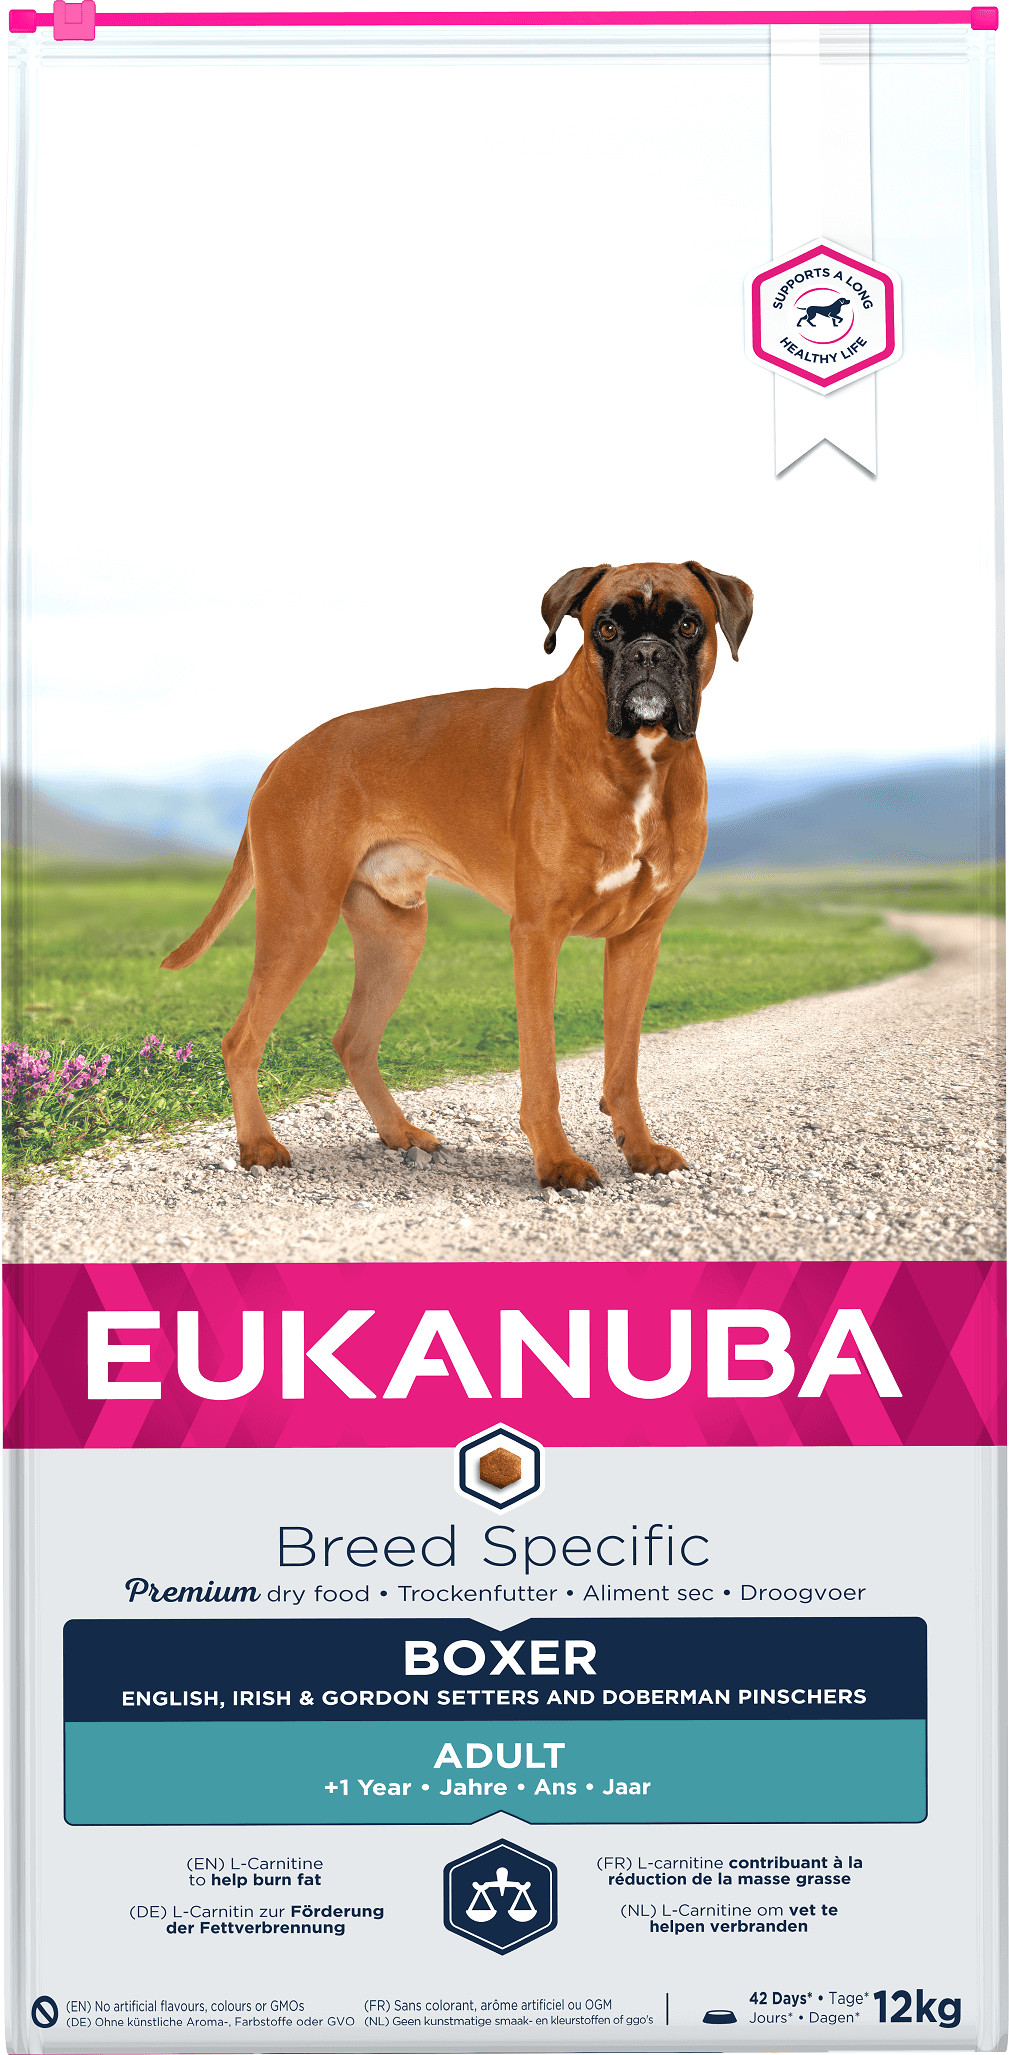 Eukanuba Boxer Hundefutter